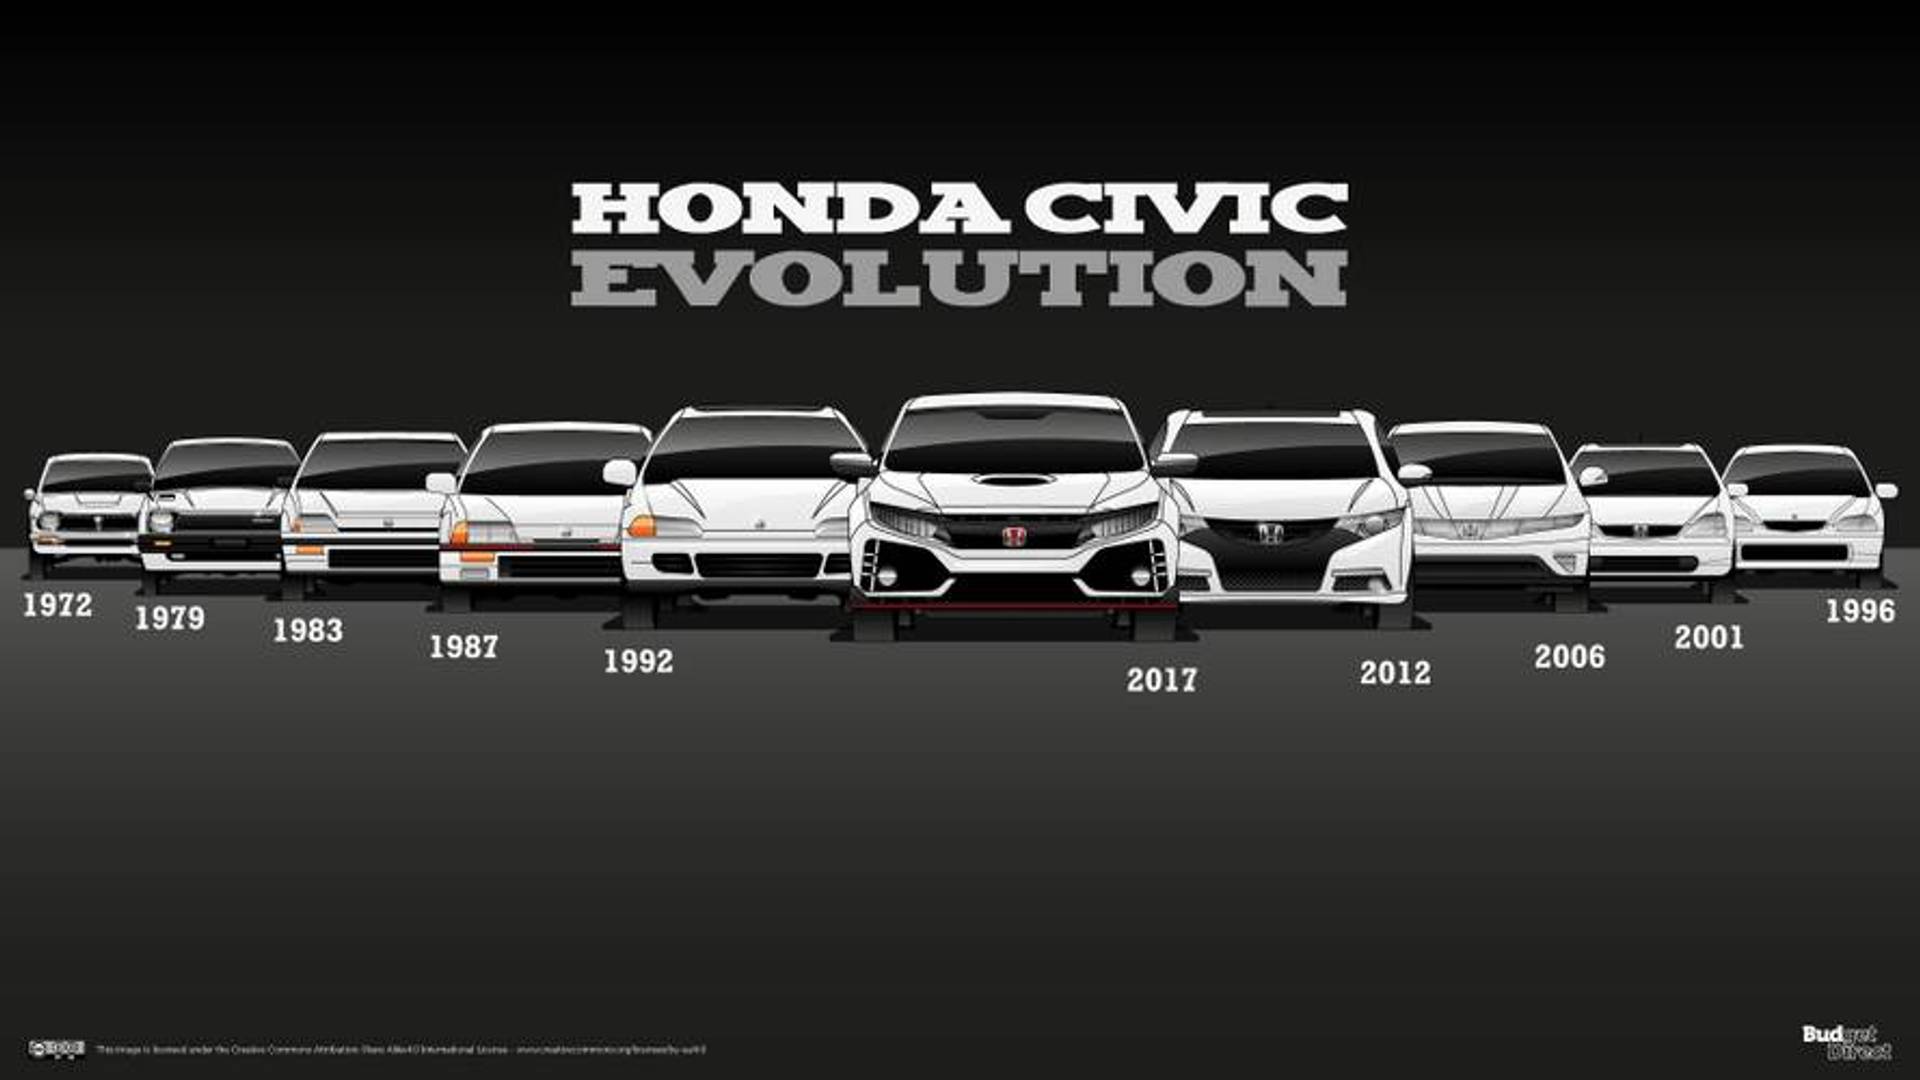 Honda Civic History. Motor1.com Photo